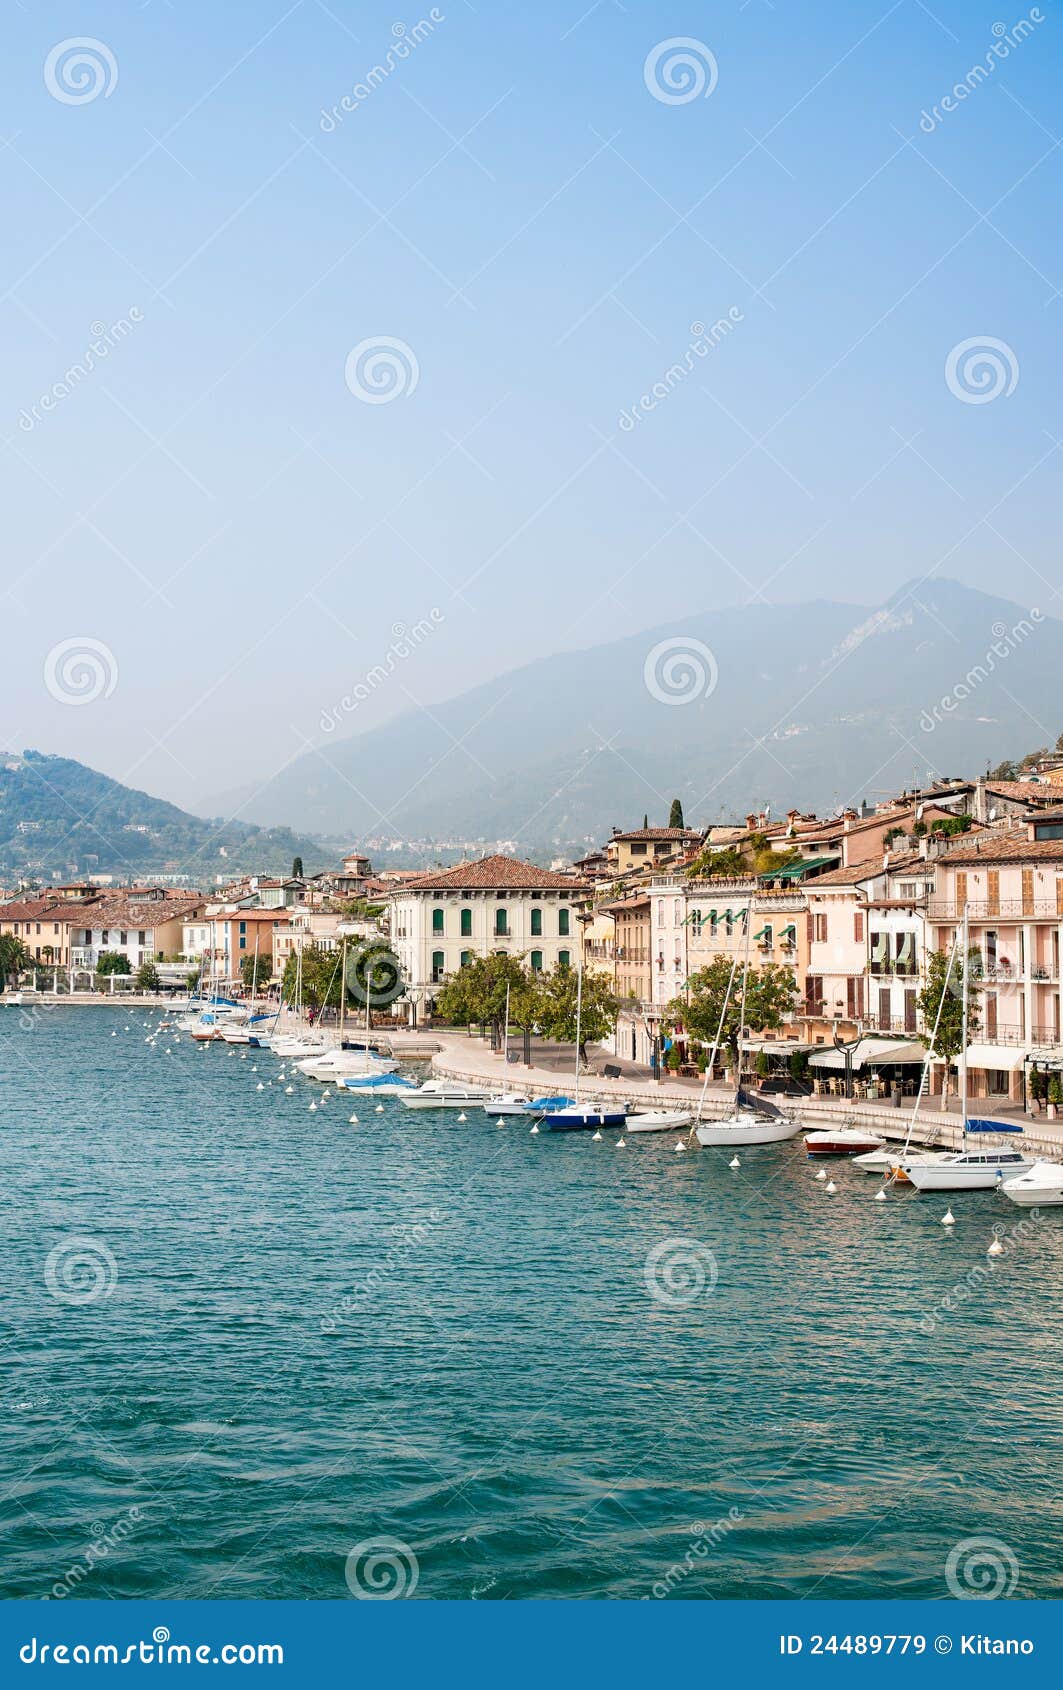 Garda意大利湖salo. 背景白云岩garda有历史的意大利湖salo小的村庄